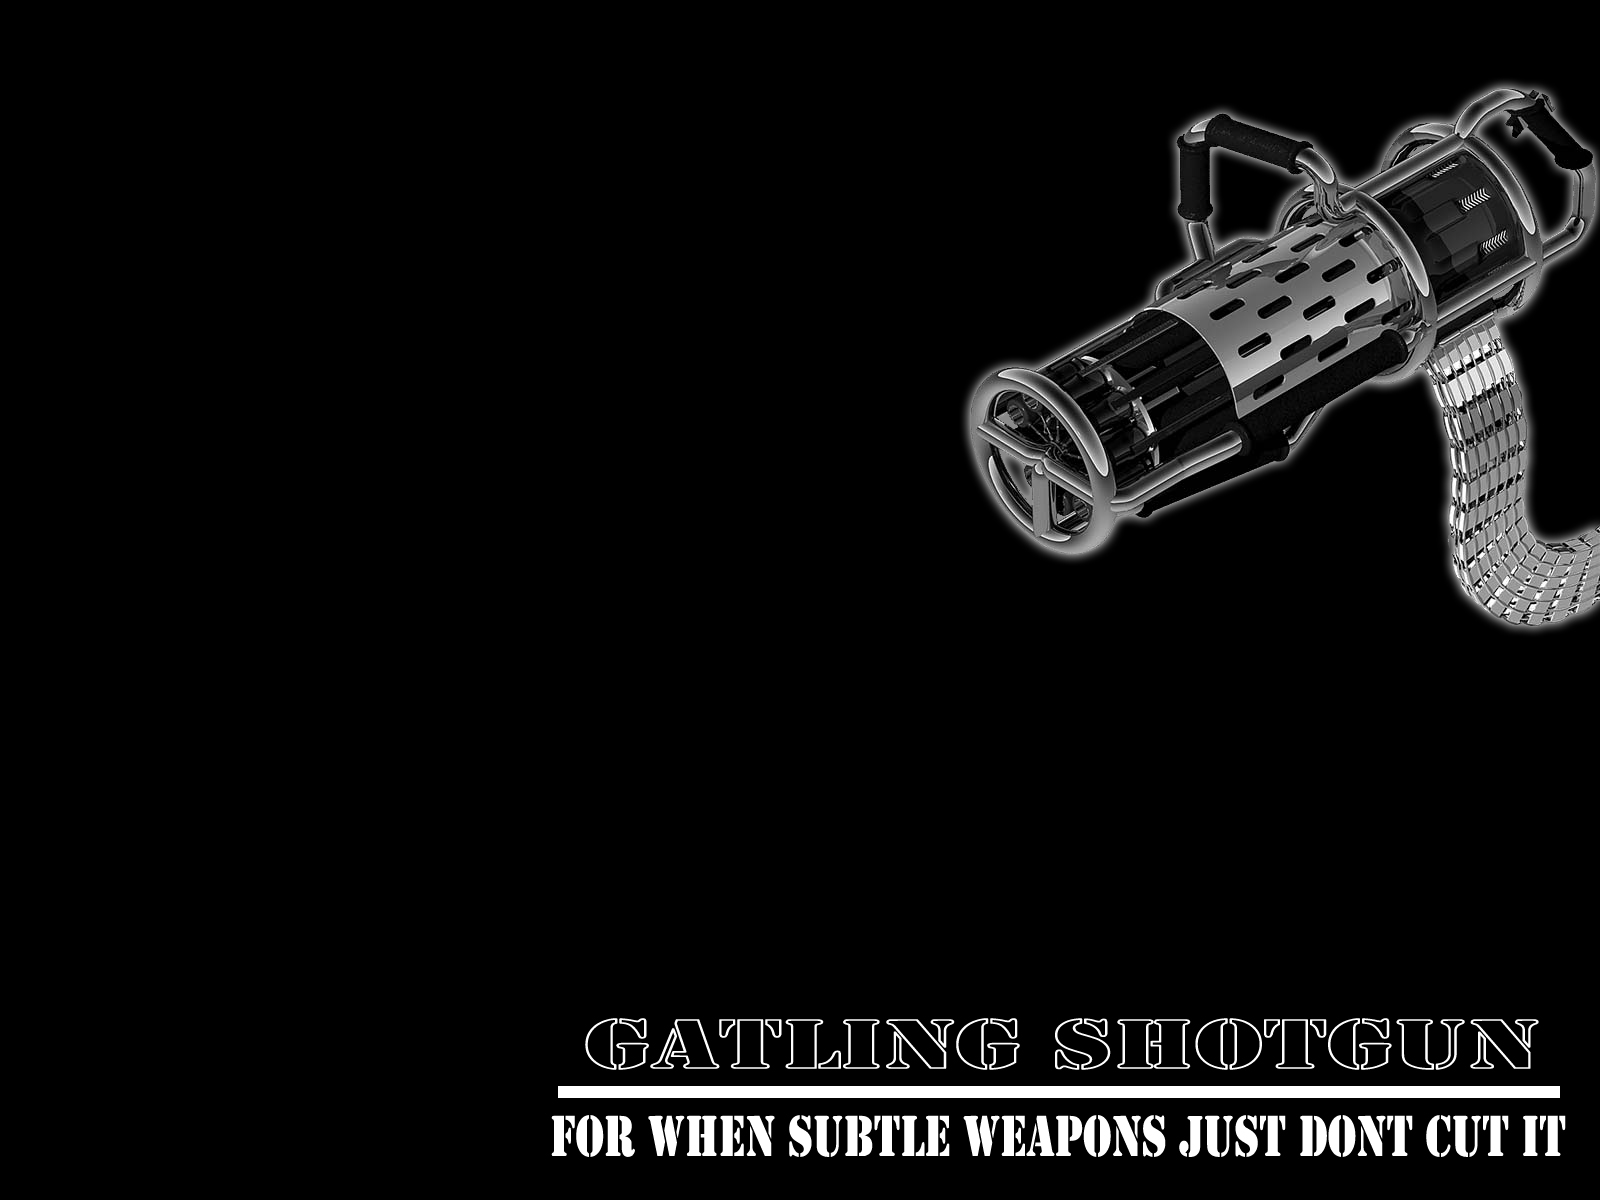 Man Made Machine Gun HD Wallpaper | Background Image